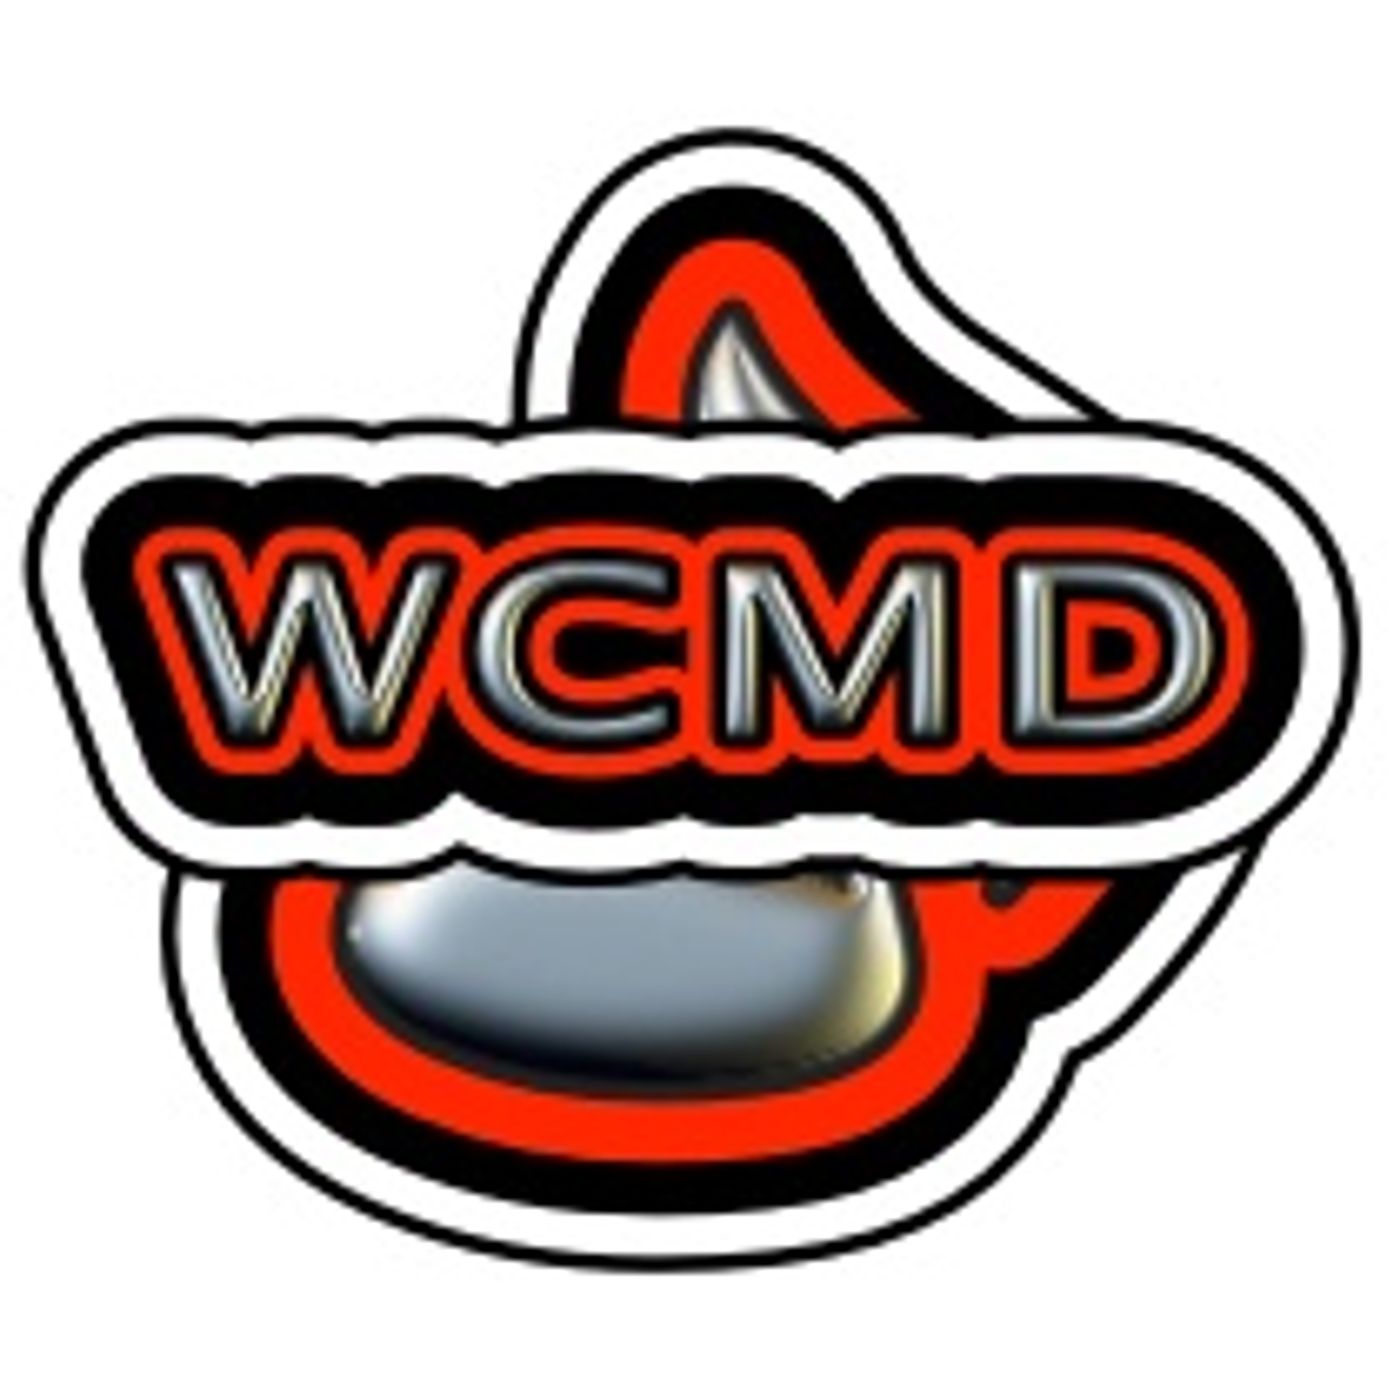 WCMD Radio - The Sunday Night Segway